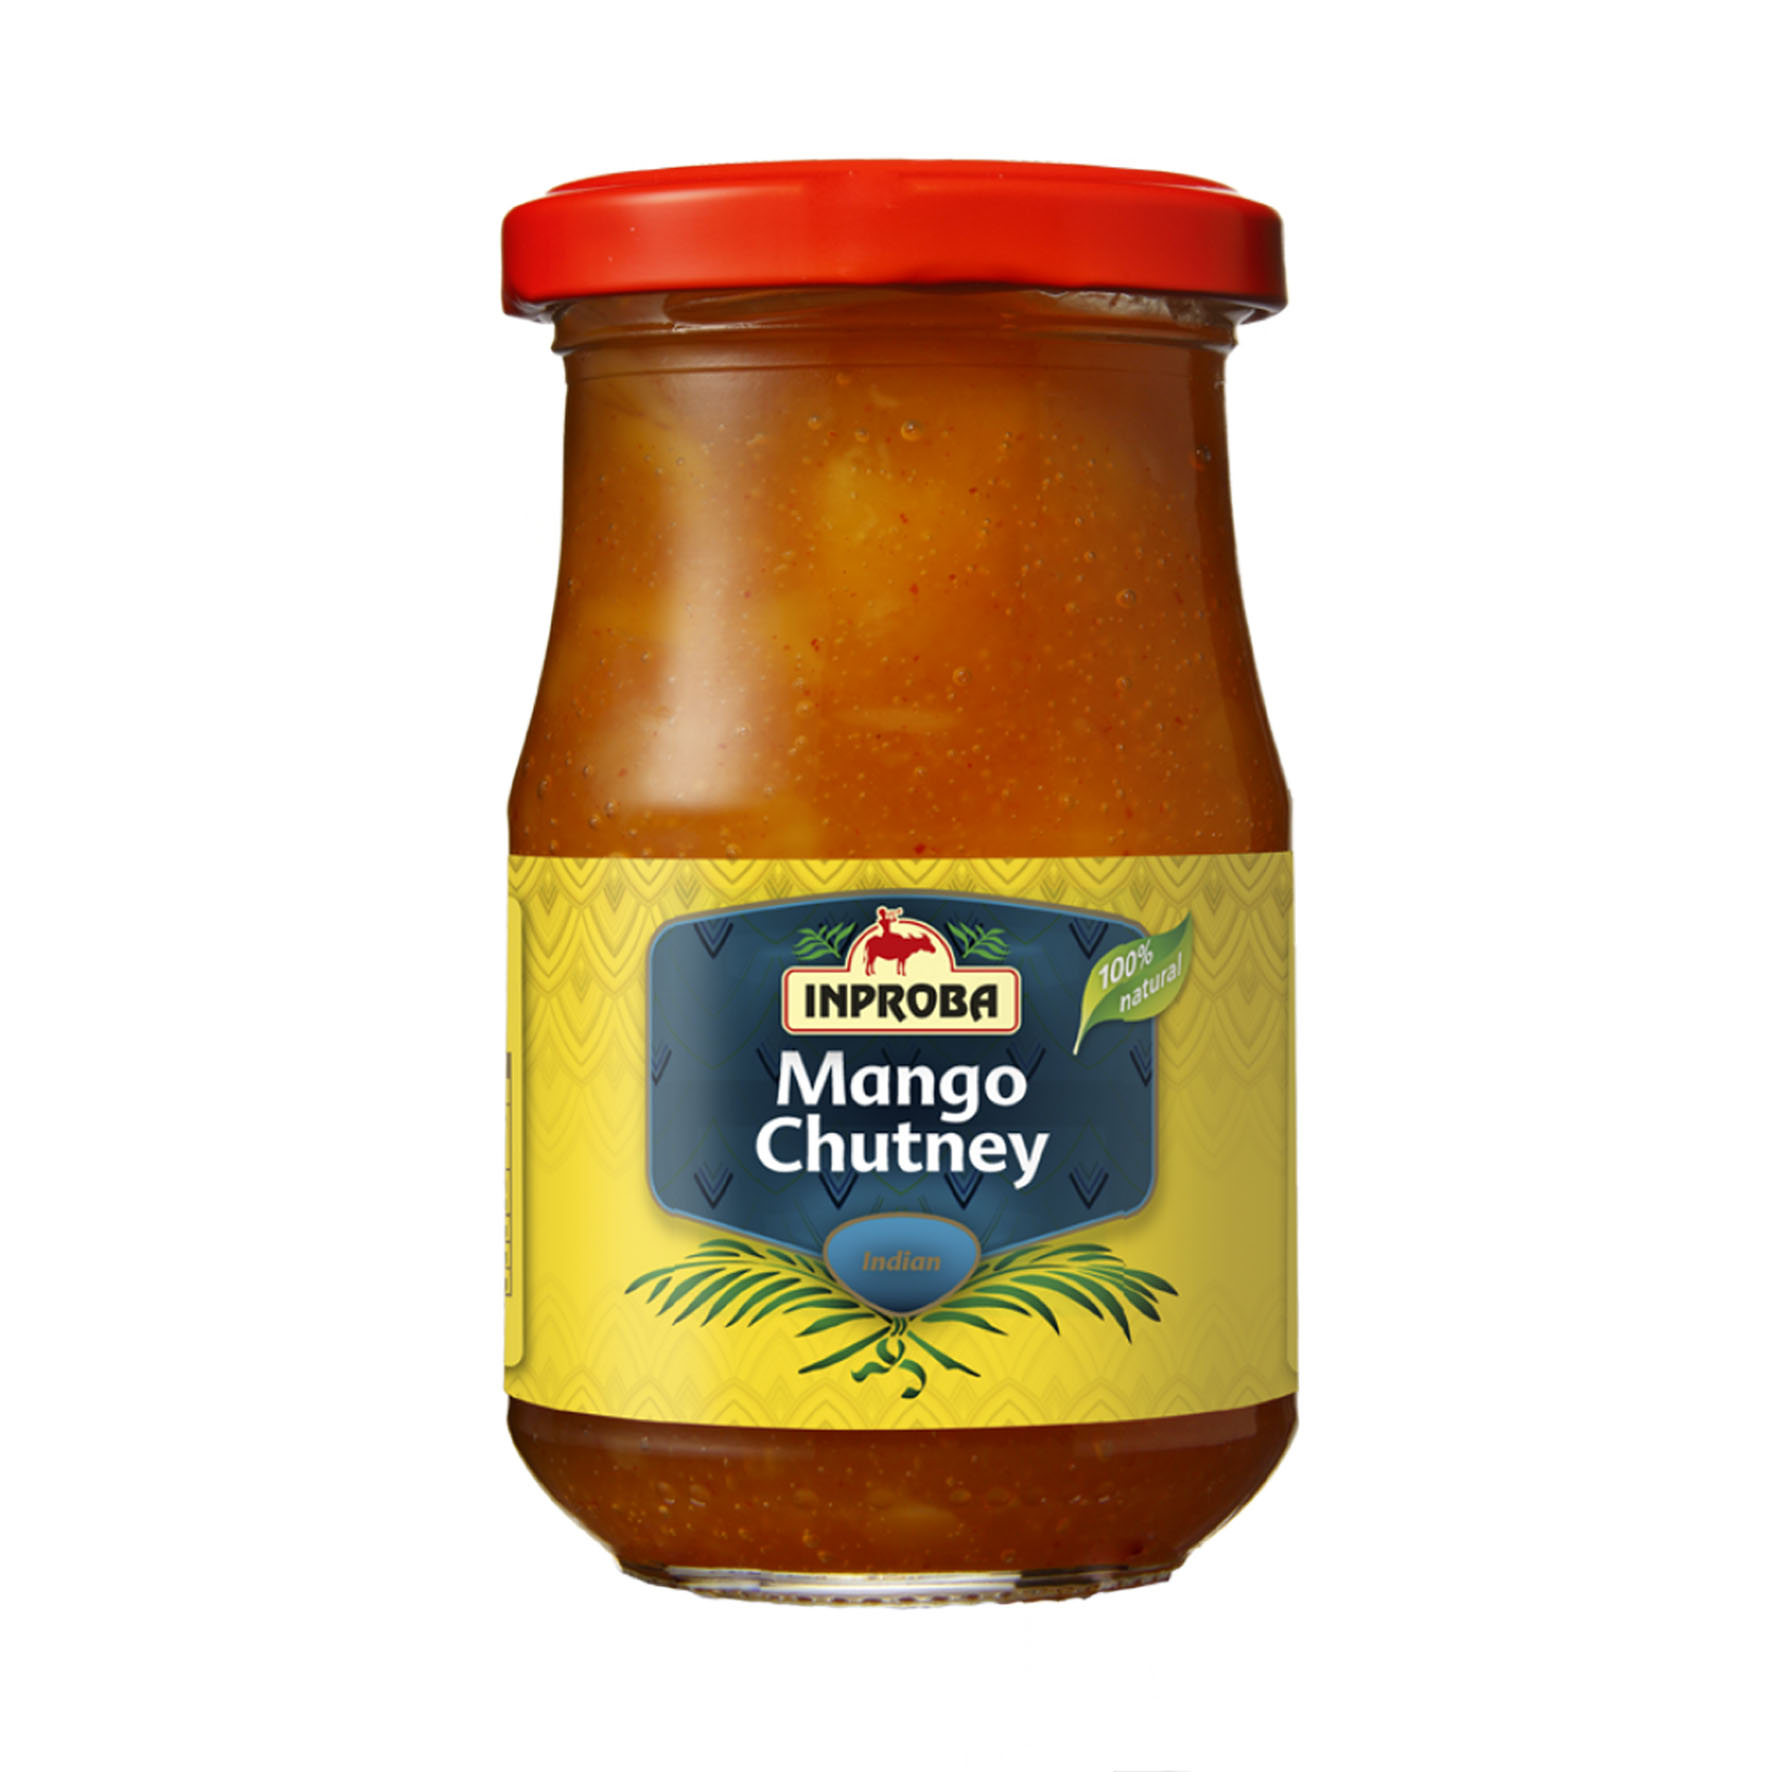 Inproba salsa mango chutney 220g